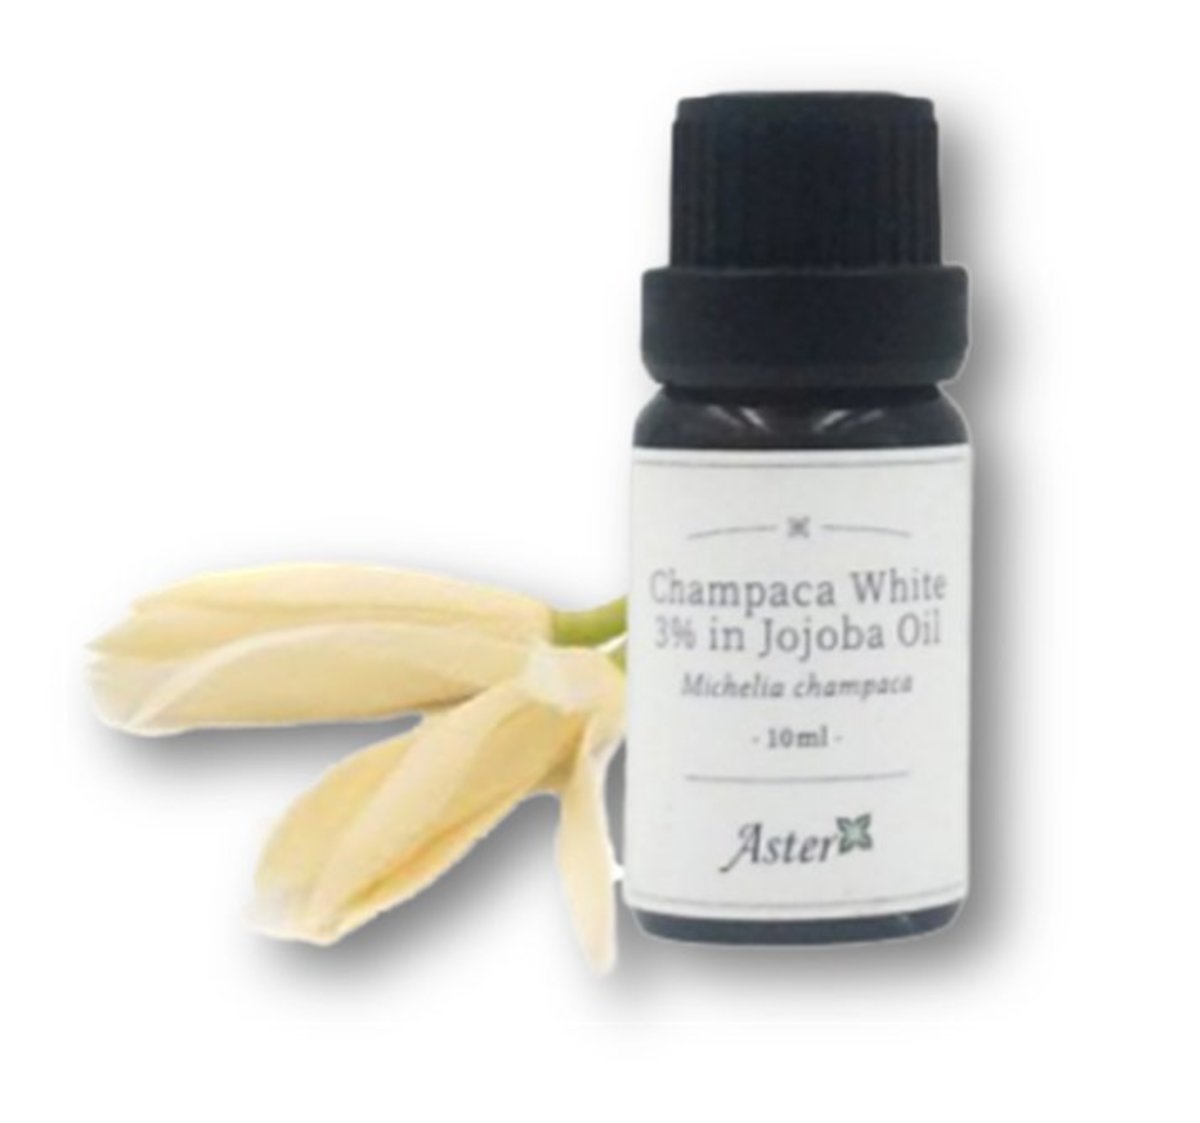 3% White Champaca Absolute (Michelia champaca) in Organic Jojoba Oil (Simmondsia chinensis) - 10ml